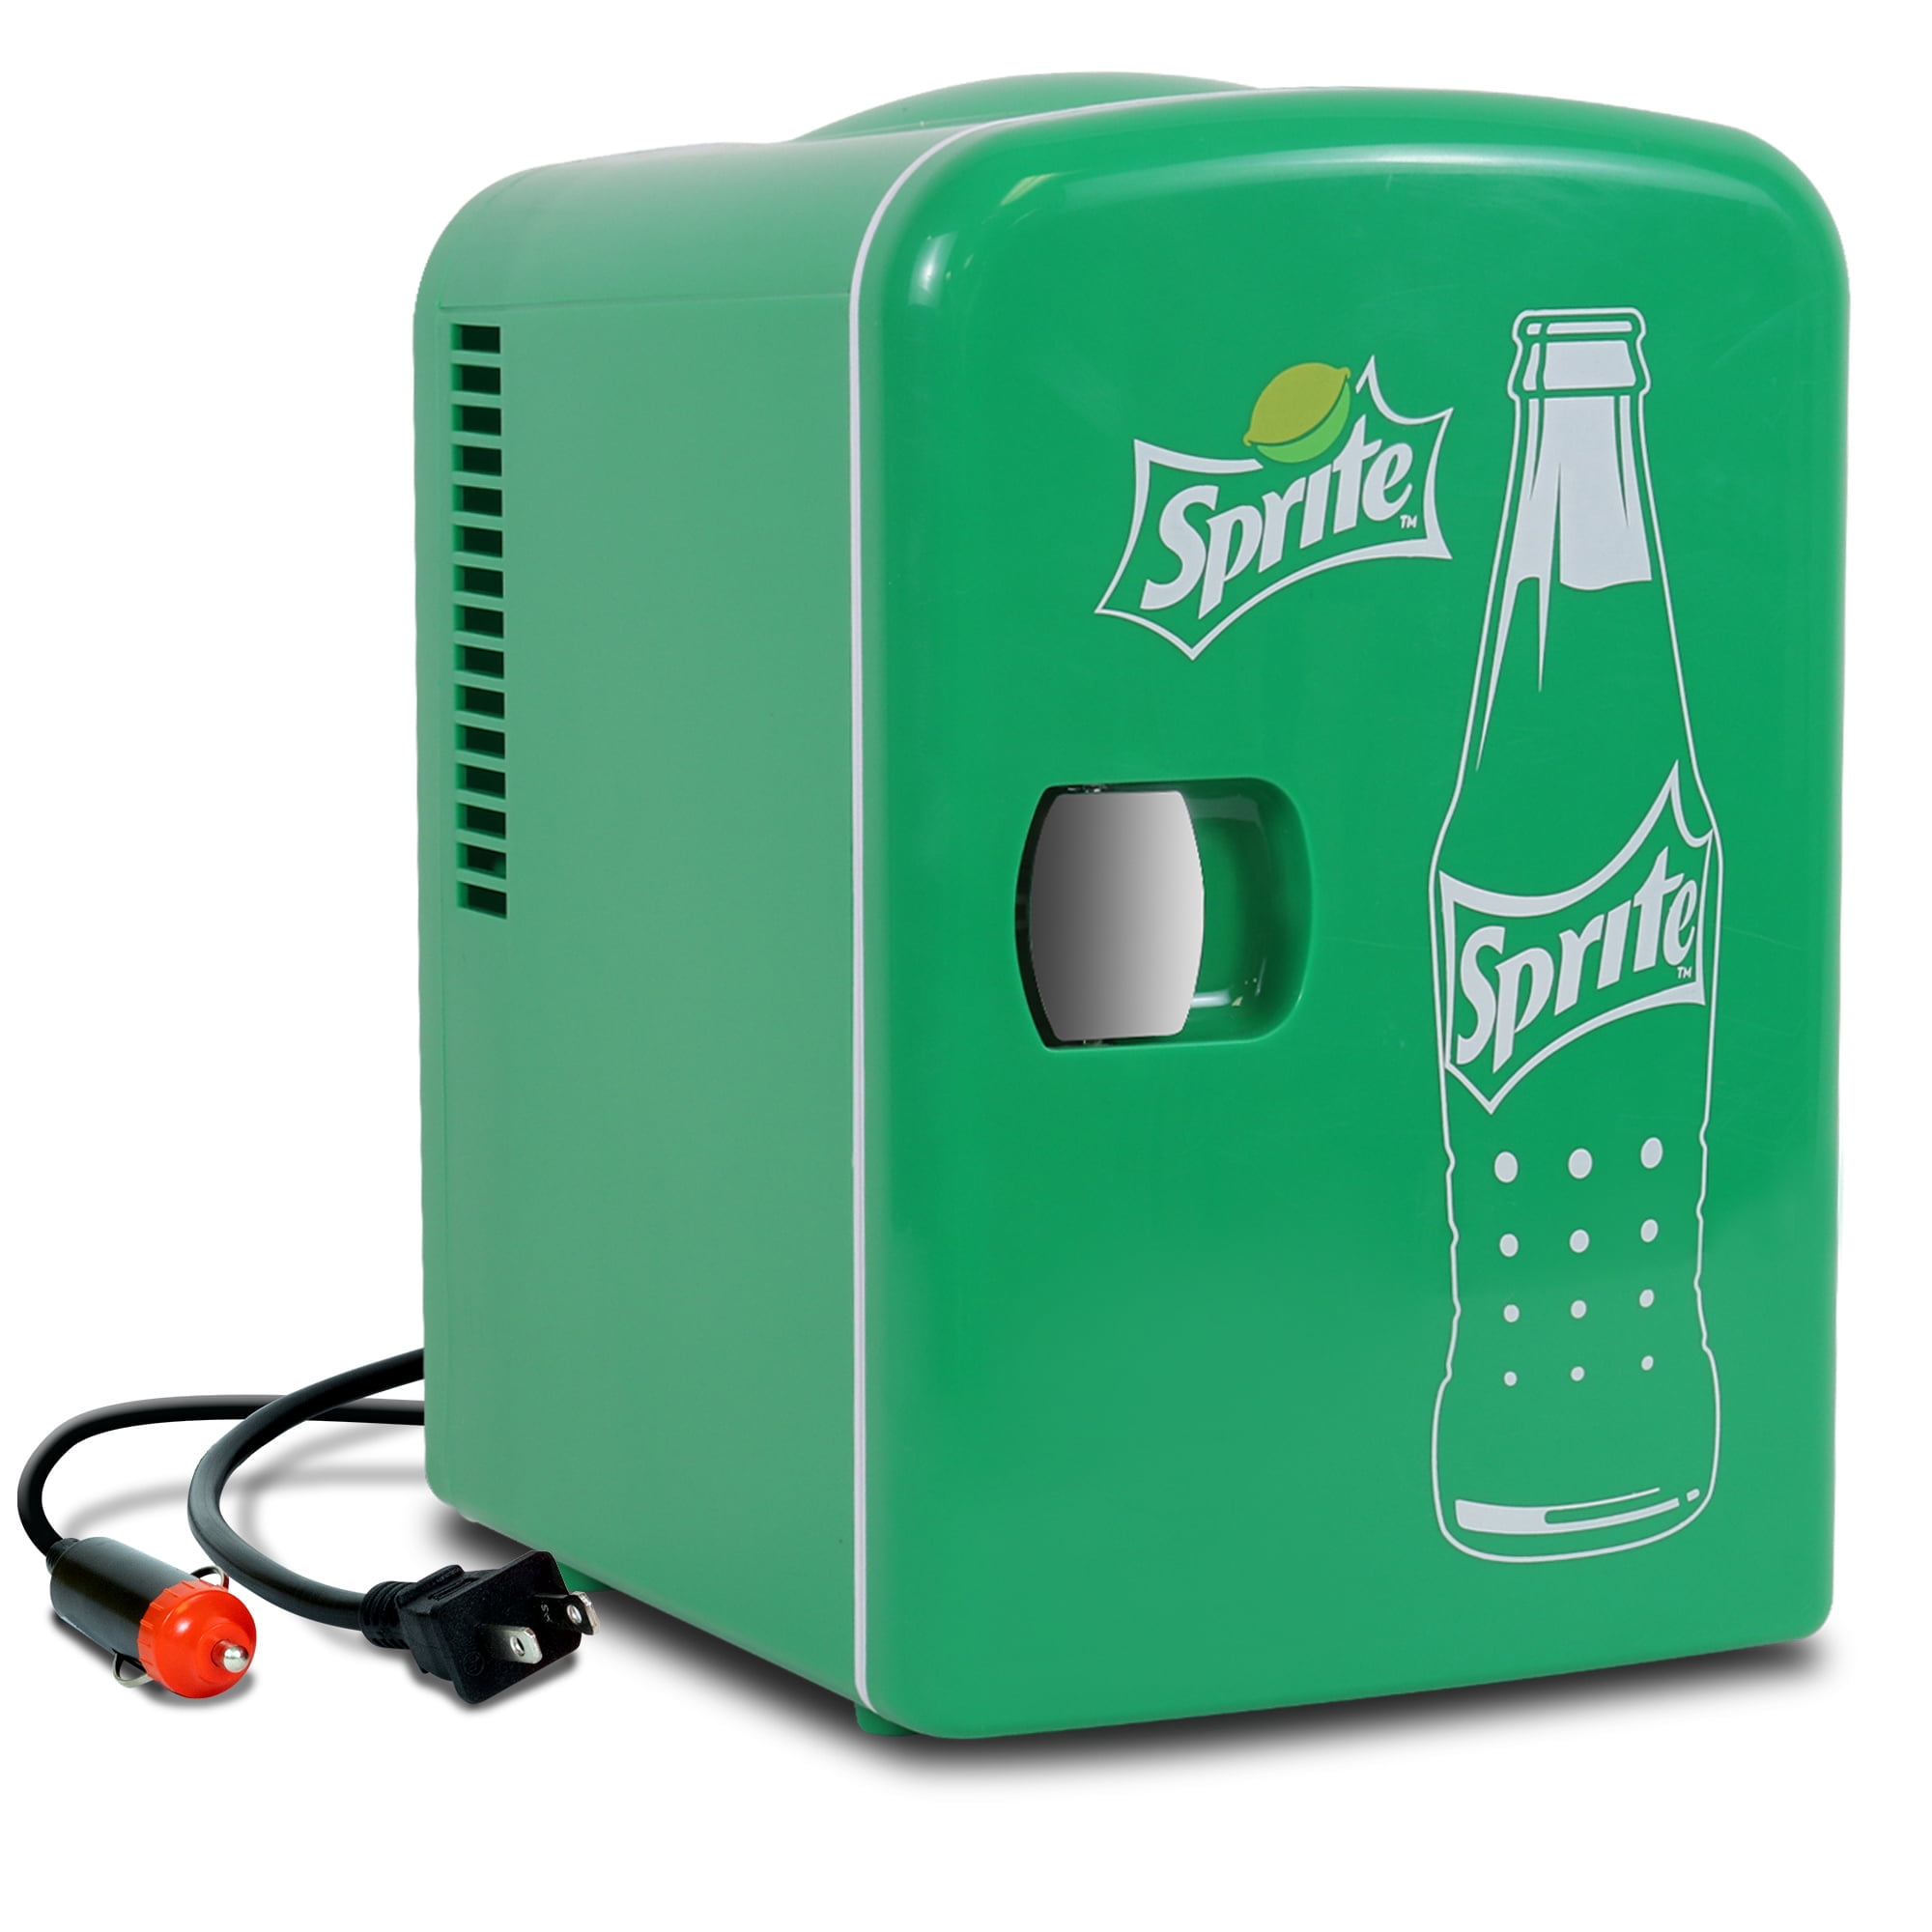 Sprite 4L Compact Personal Travel Fridge | Warmer/Cooler